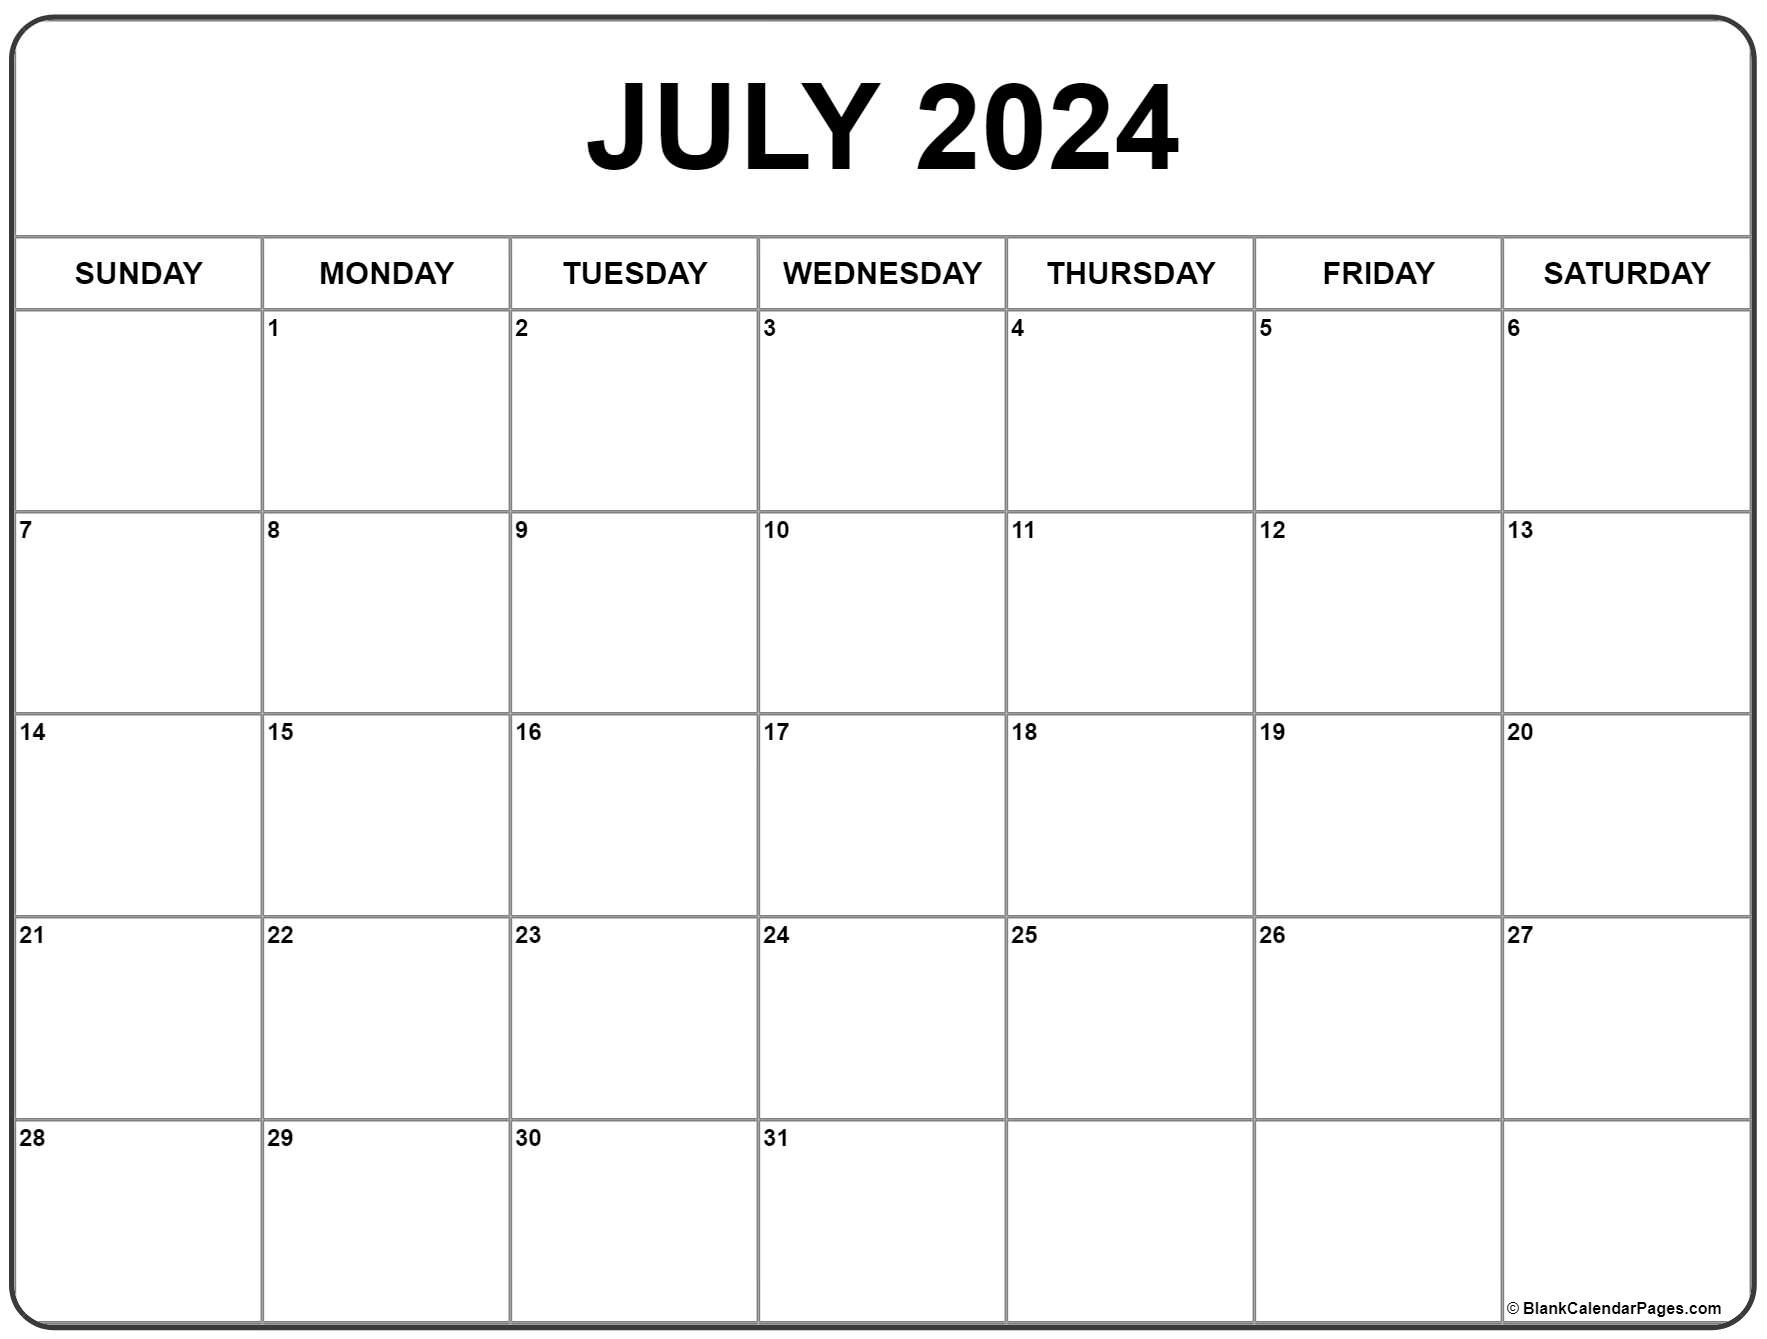 July 2024 Calendar | Free Printable Calendar for Free July 2024 Calendar Printable